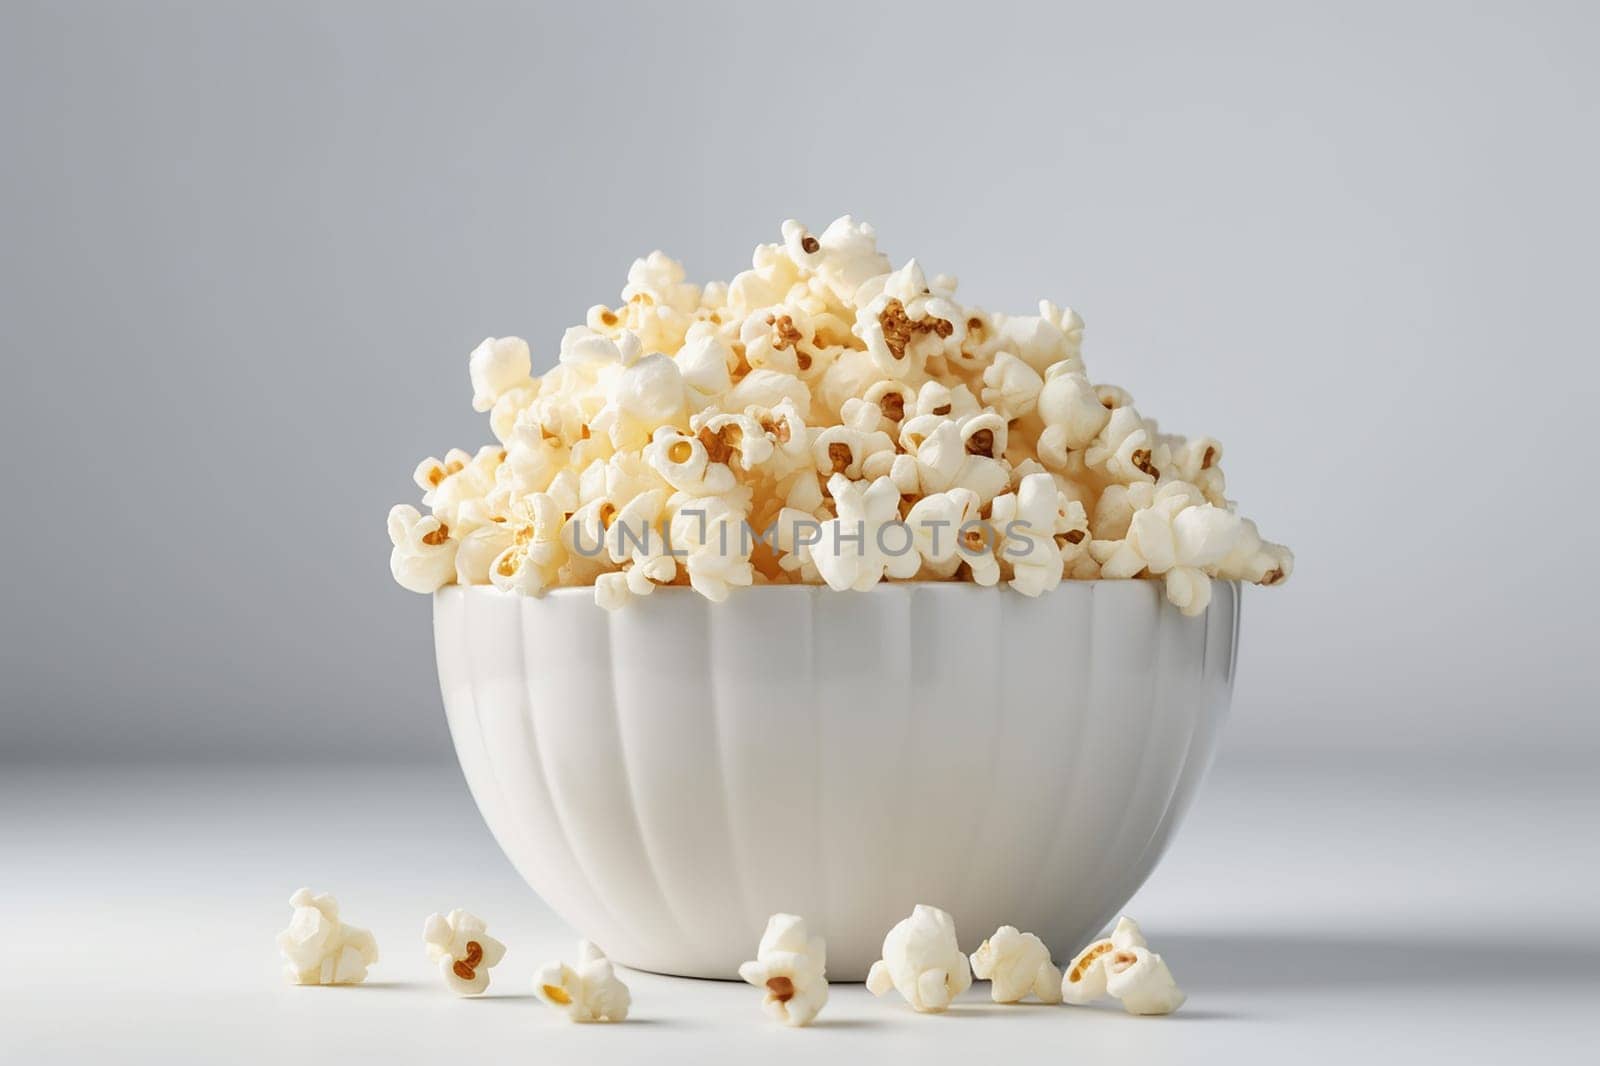 Bowl of freshly popped white popcorn on a plain background